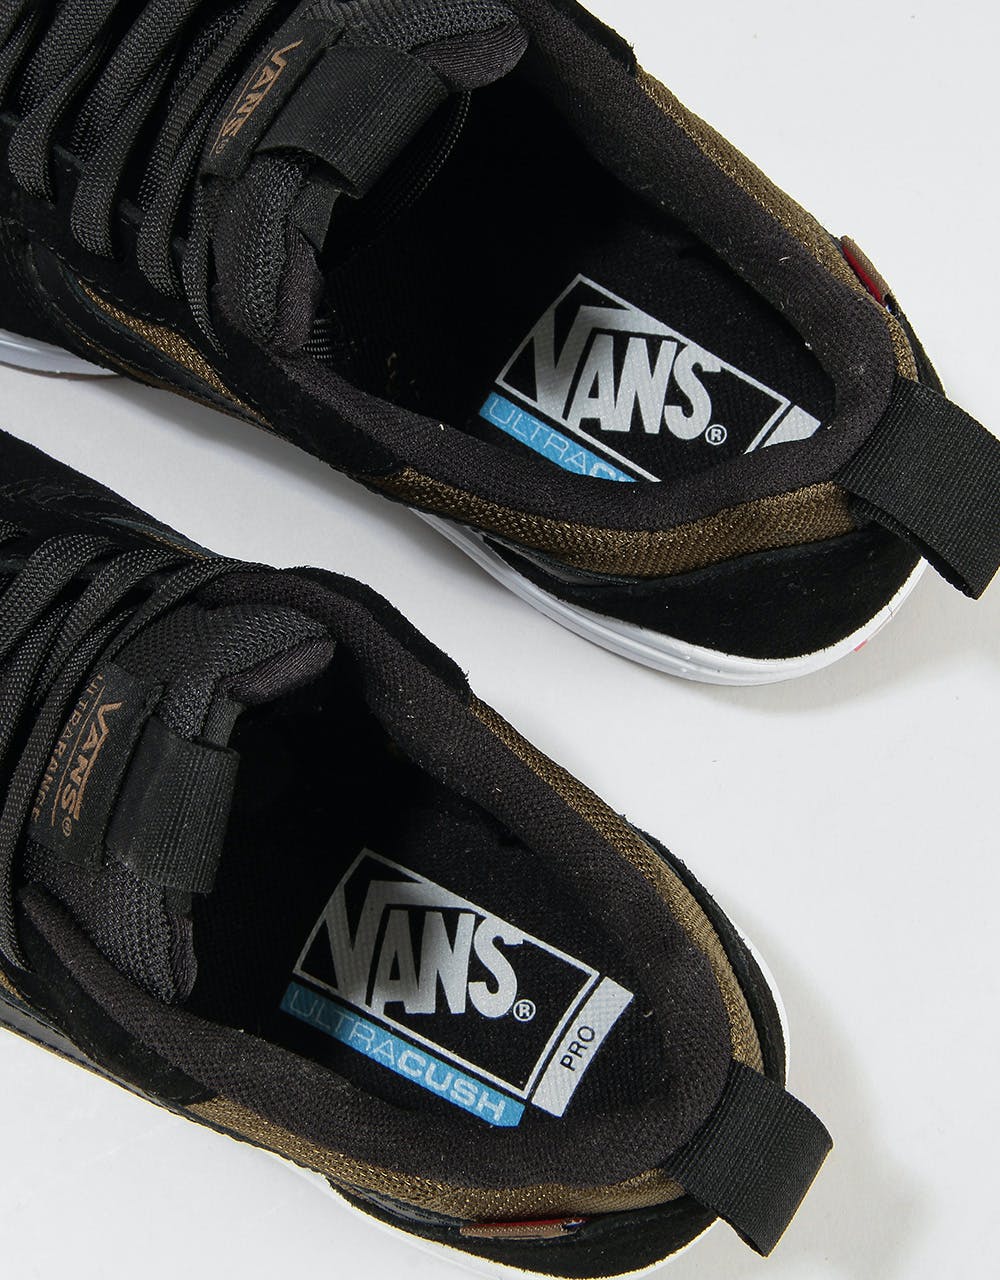 Vans Ultra Range Pro 2 Skate Shoes - (Tactile) Black/Beech